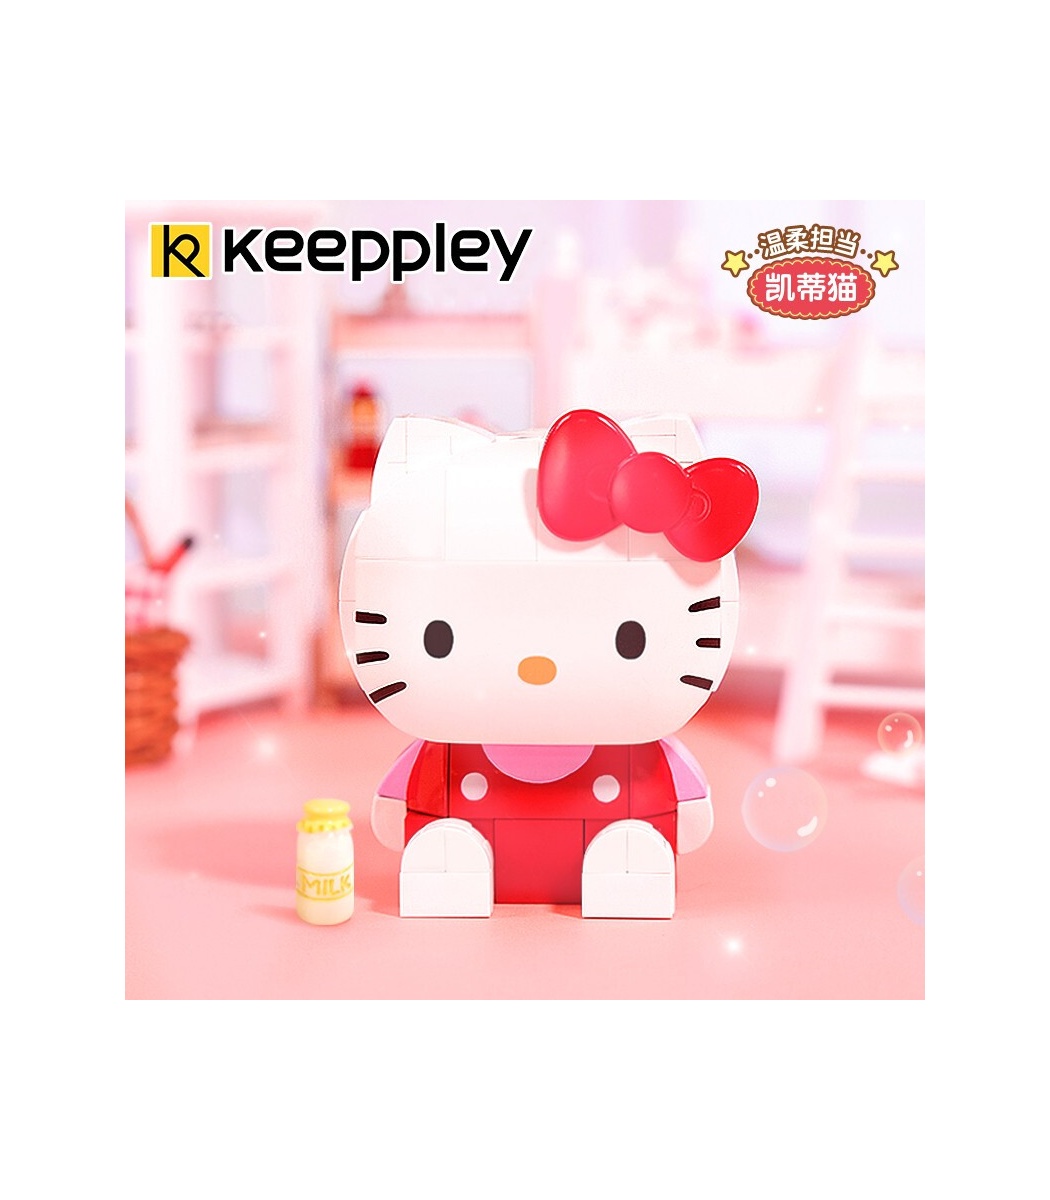 Hello Kitty Bricks – My Cute Station